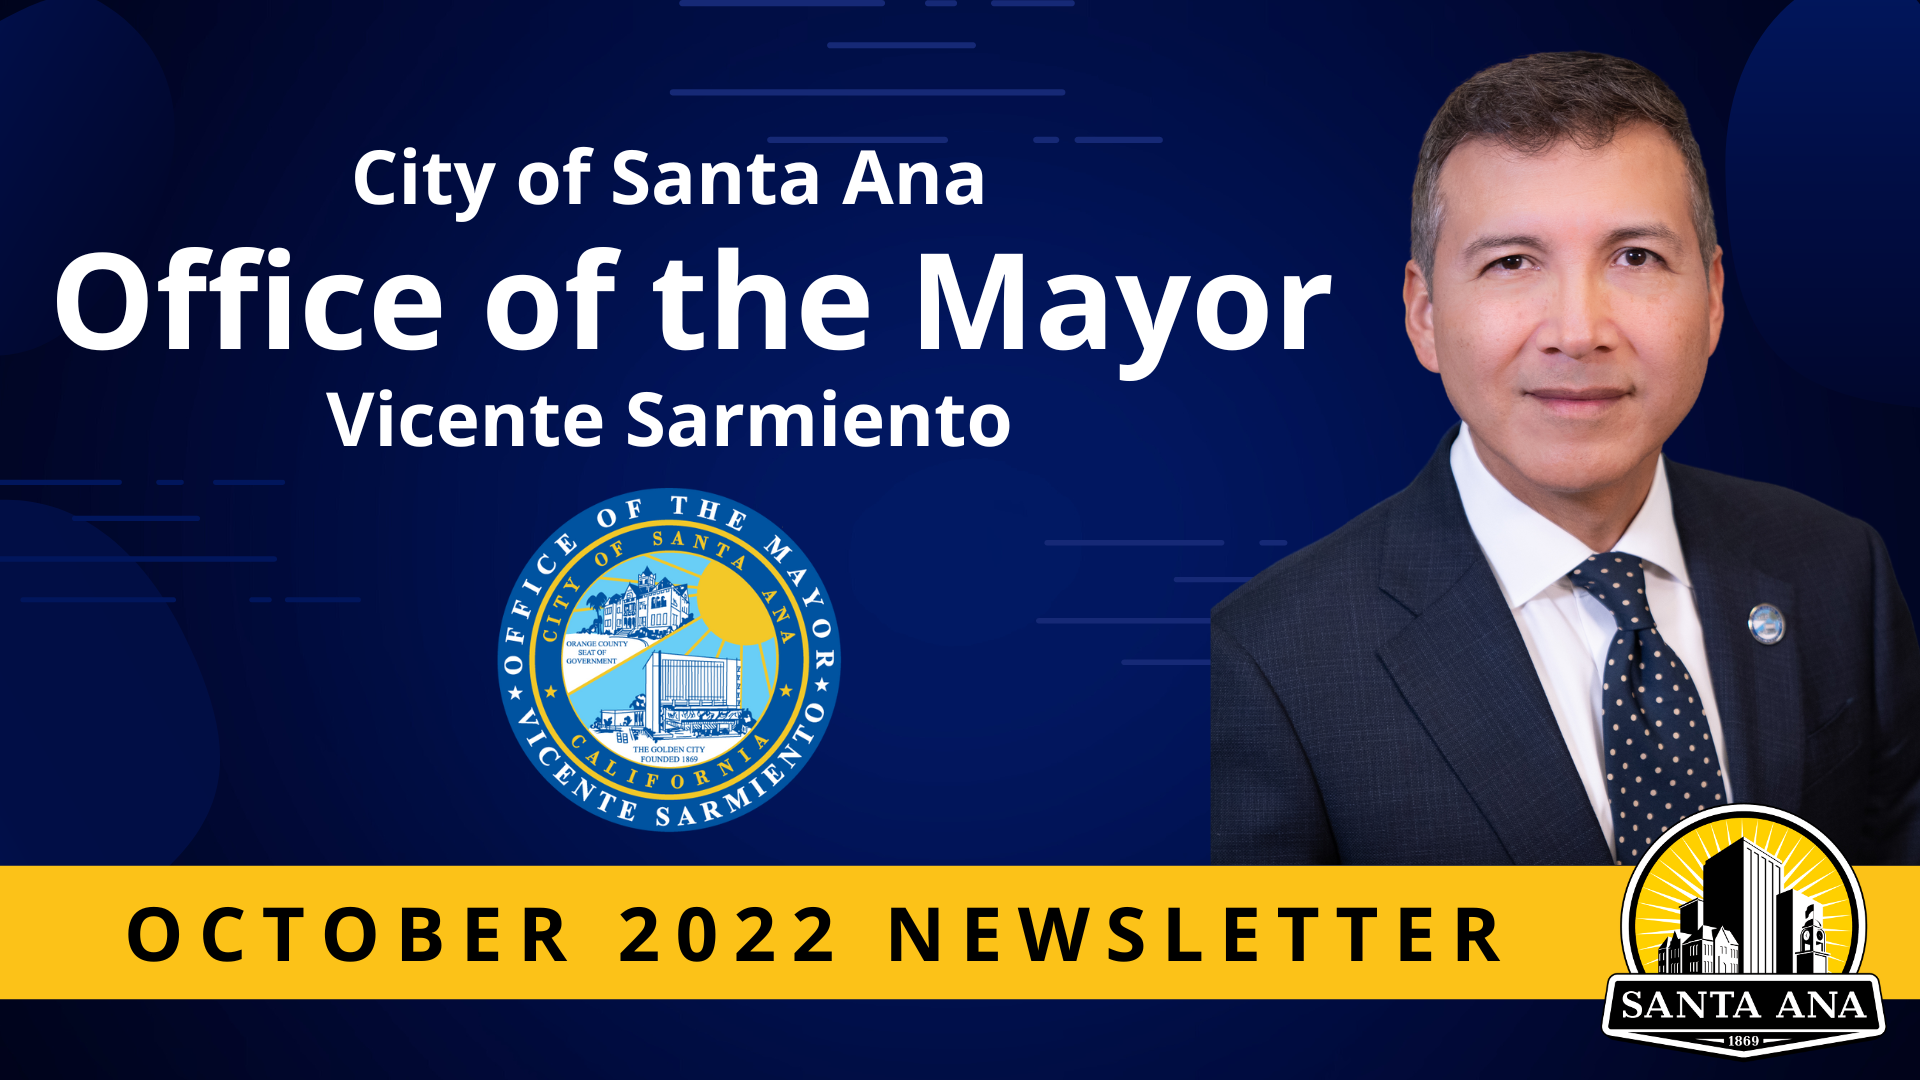 Mayor Sarmiento's Newsletter Header in Opens Sans